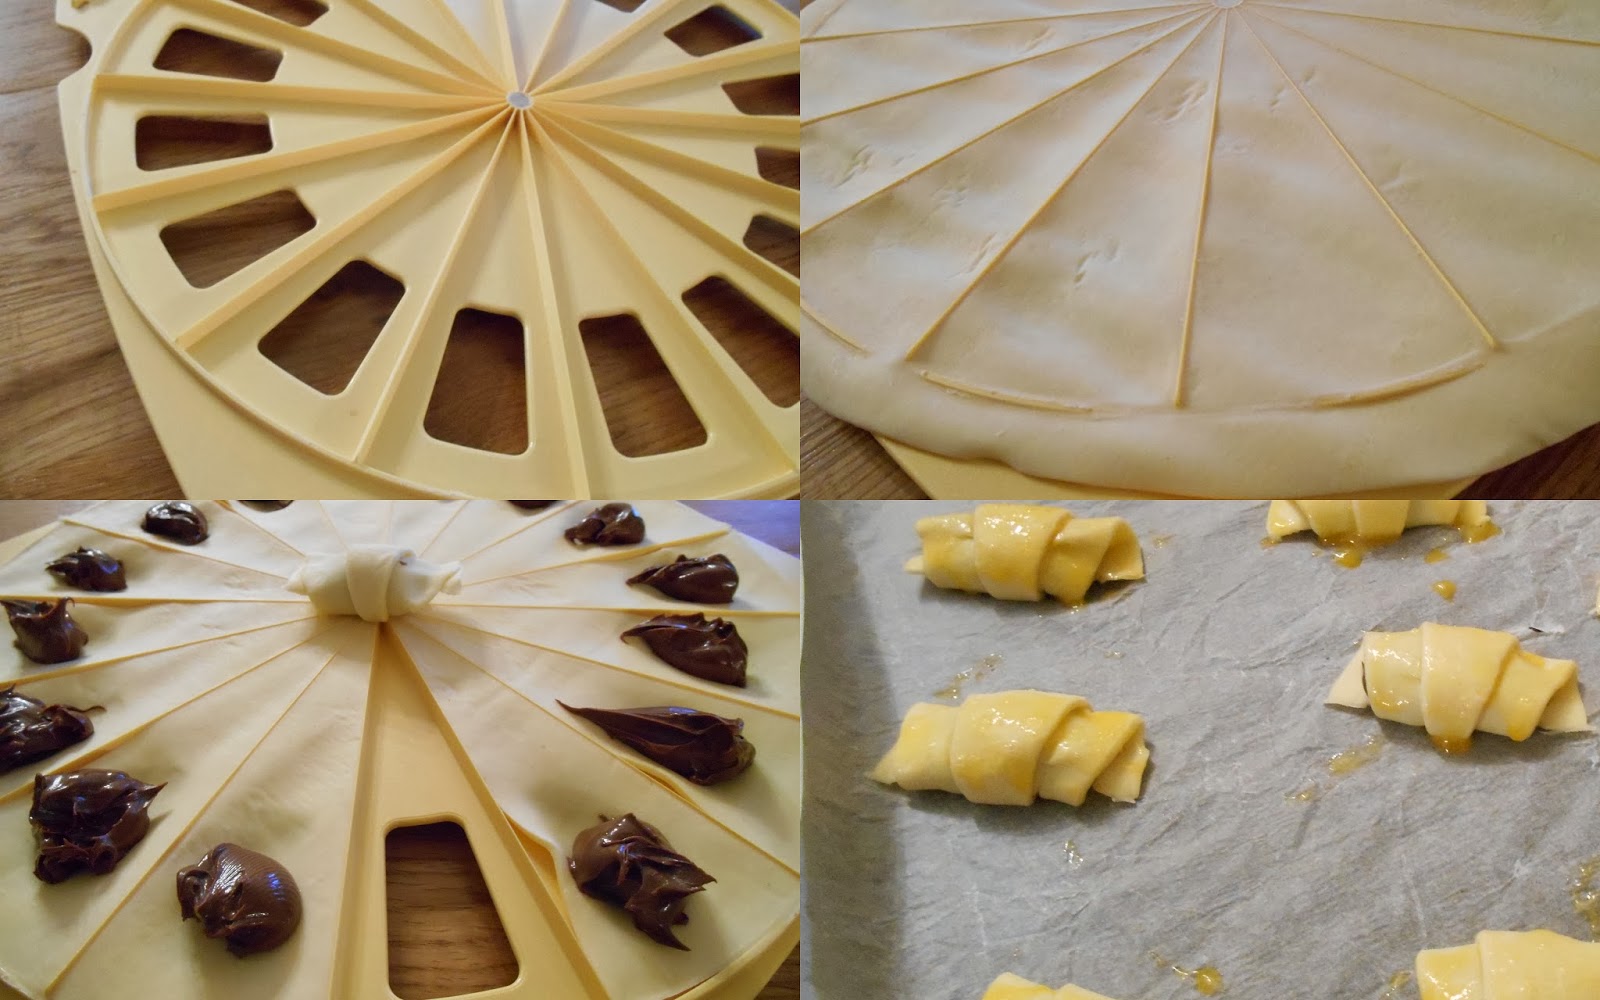 كرواسون أو بتي بان بطريقتي بالصور التفصيلية  Croissant+nutella.jpg+montage